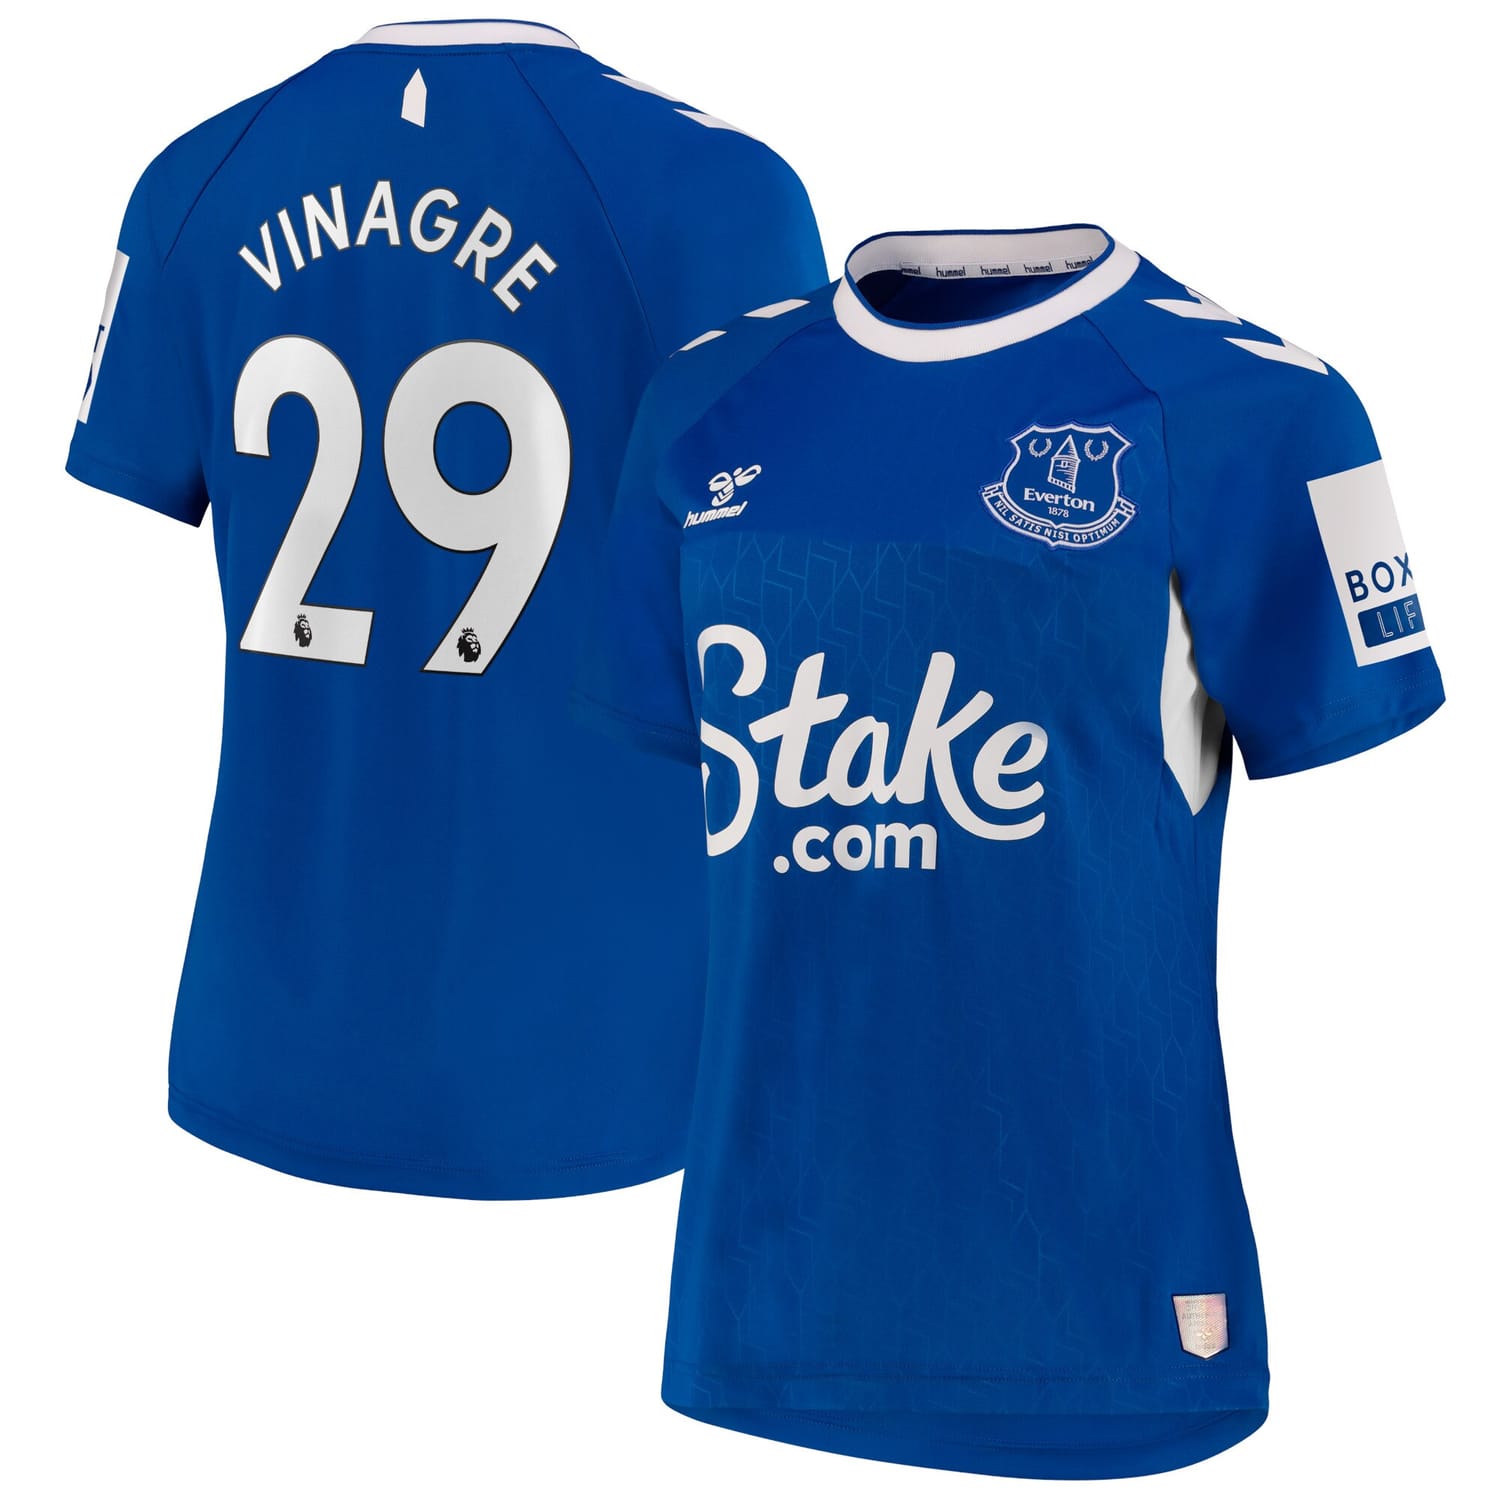 Premier League Everton Home Jersey Shirt 2022-23 player Rúben Vinagre 29 printing for Women